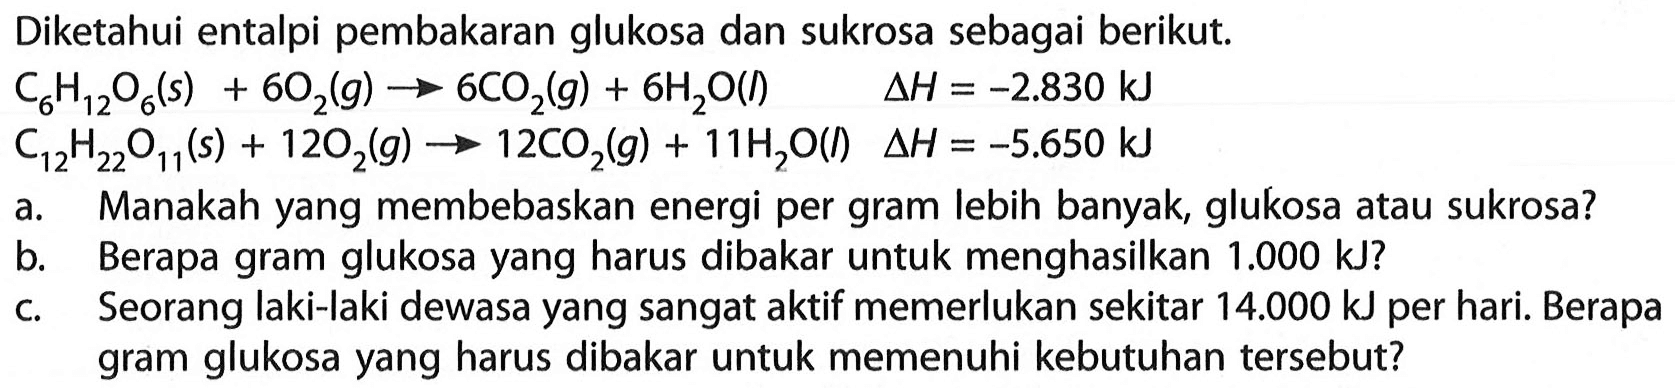 Diketahui entalpi pembakaran glukosa dan sukrosa sebagai berikut.

C6H12O6 (s) + 6O2 (g) -> 6CO2 (g) + 6H2O (l) delta H= -2.830 kJ 
C12H22O11 (s) + 12O2 (g) -> 12CO2 (g) + 11H2O (I)  delta H = -5.650 kJ

a. Manakah yang membebaskan energi per gram lebih banyak, glukosa atau sukrosa?
b. Berapa gram glukosa yang harus dibakar untuk menghasilkan 1.000 kJ  ?
c. Seorang laki-laki dewasa yang sangat aktif memerlukan sekitar 14.000 kJ  per hari. Berapa gram glukosa yang harus dibakar untuk memenuhi kebutuhan tersebut?